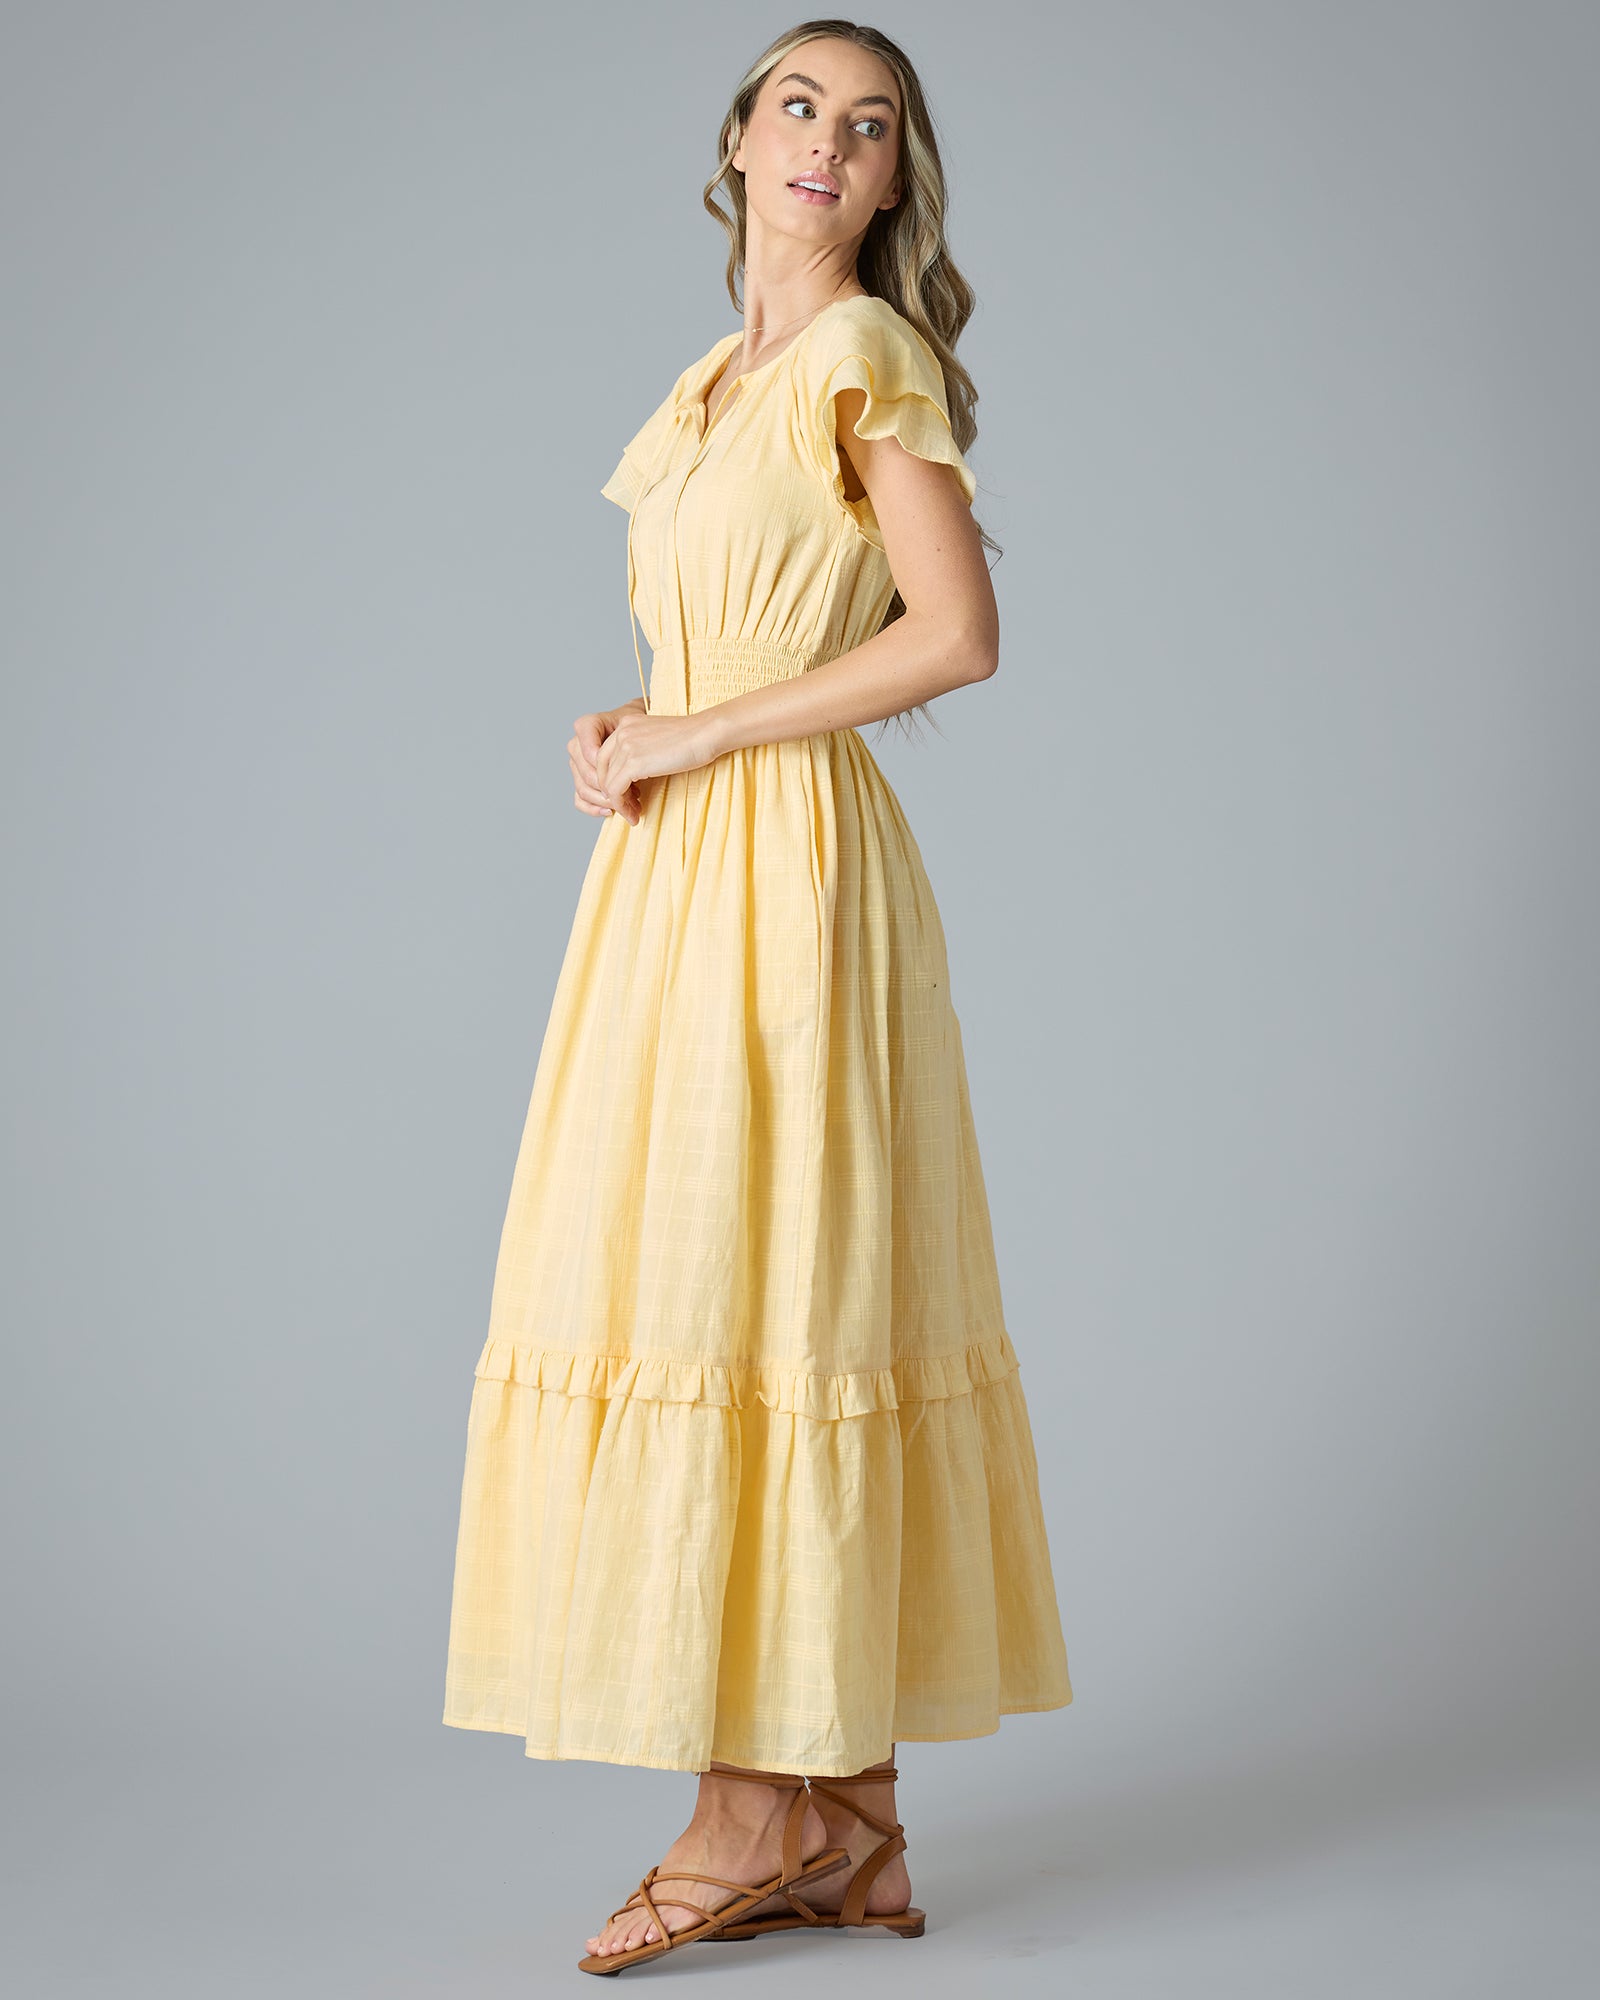 Woman in a yellow short sleeve, maxi length dress